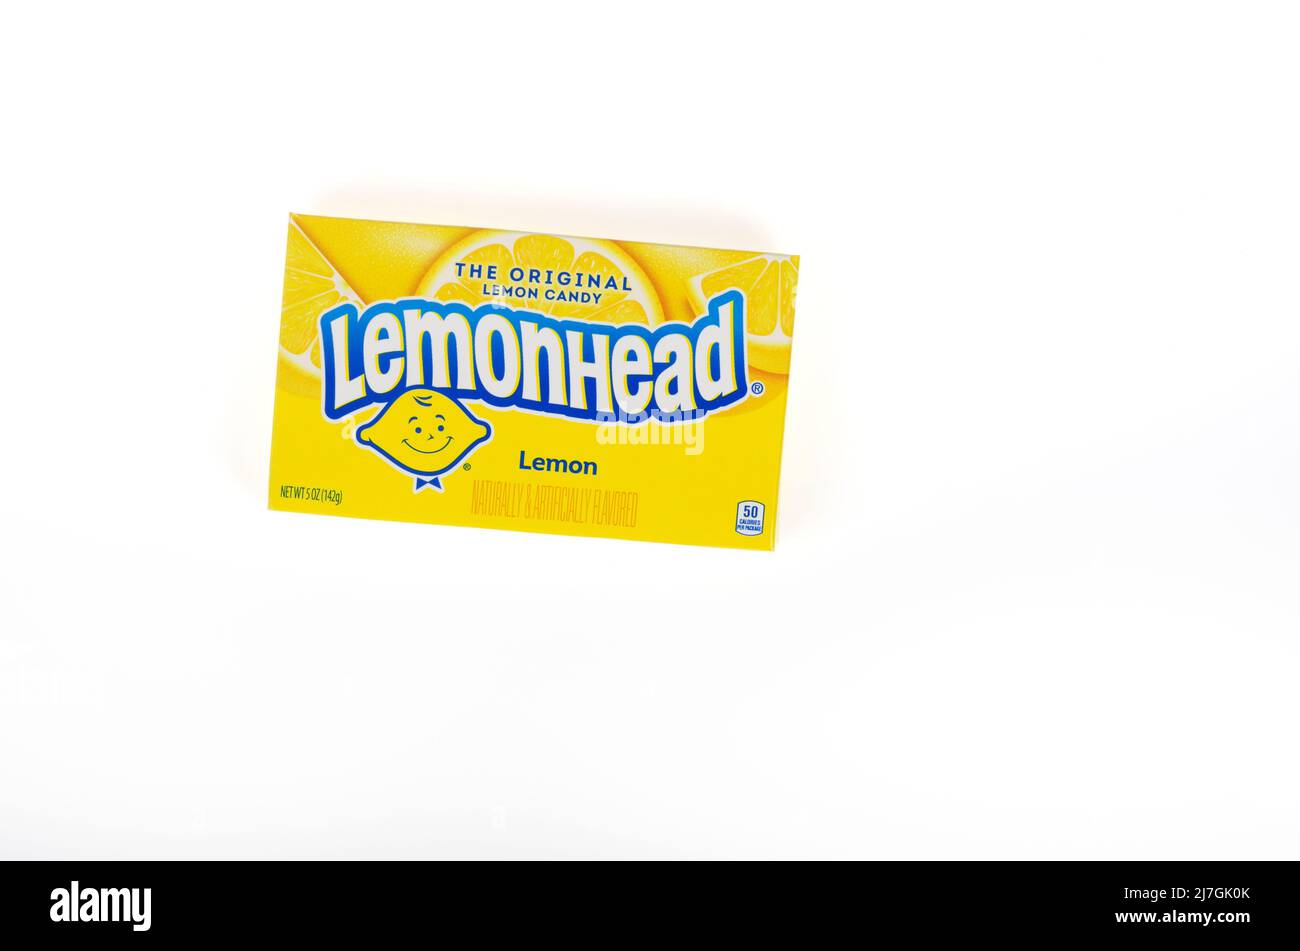 Lemonhead candy box Stock Photo